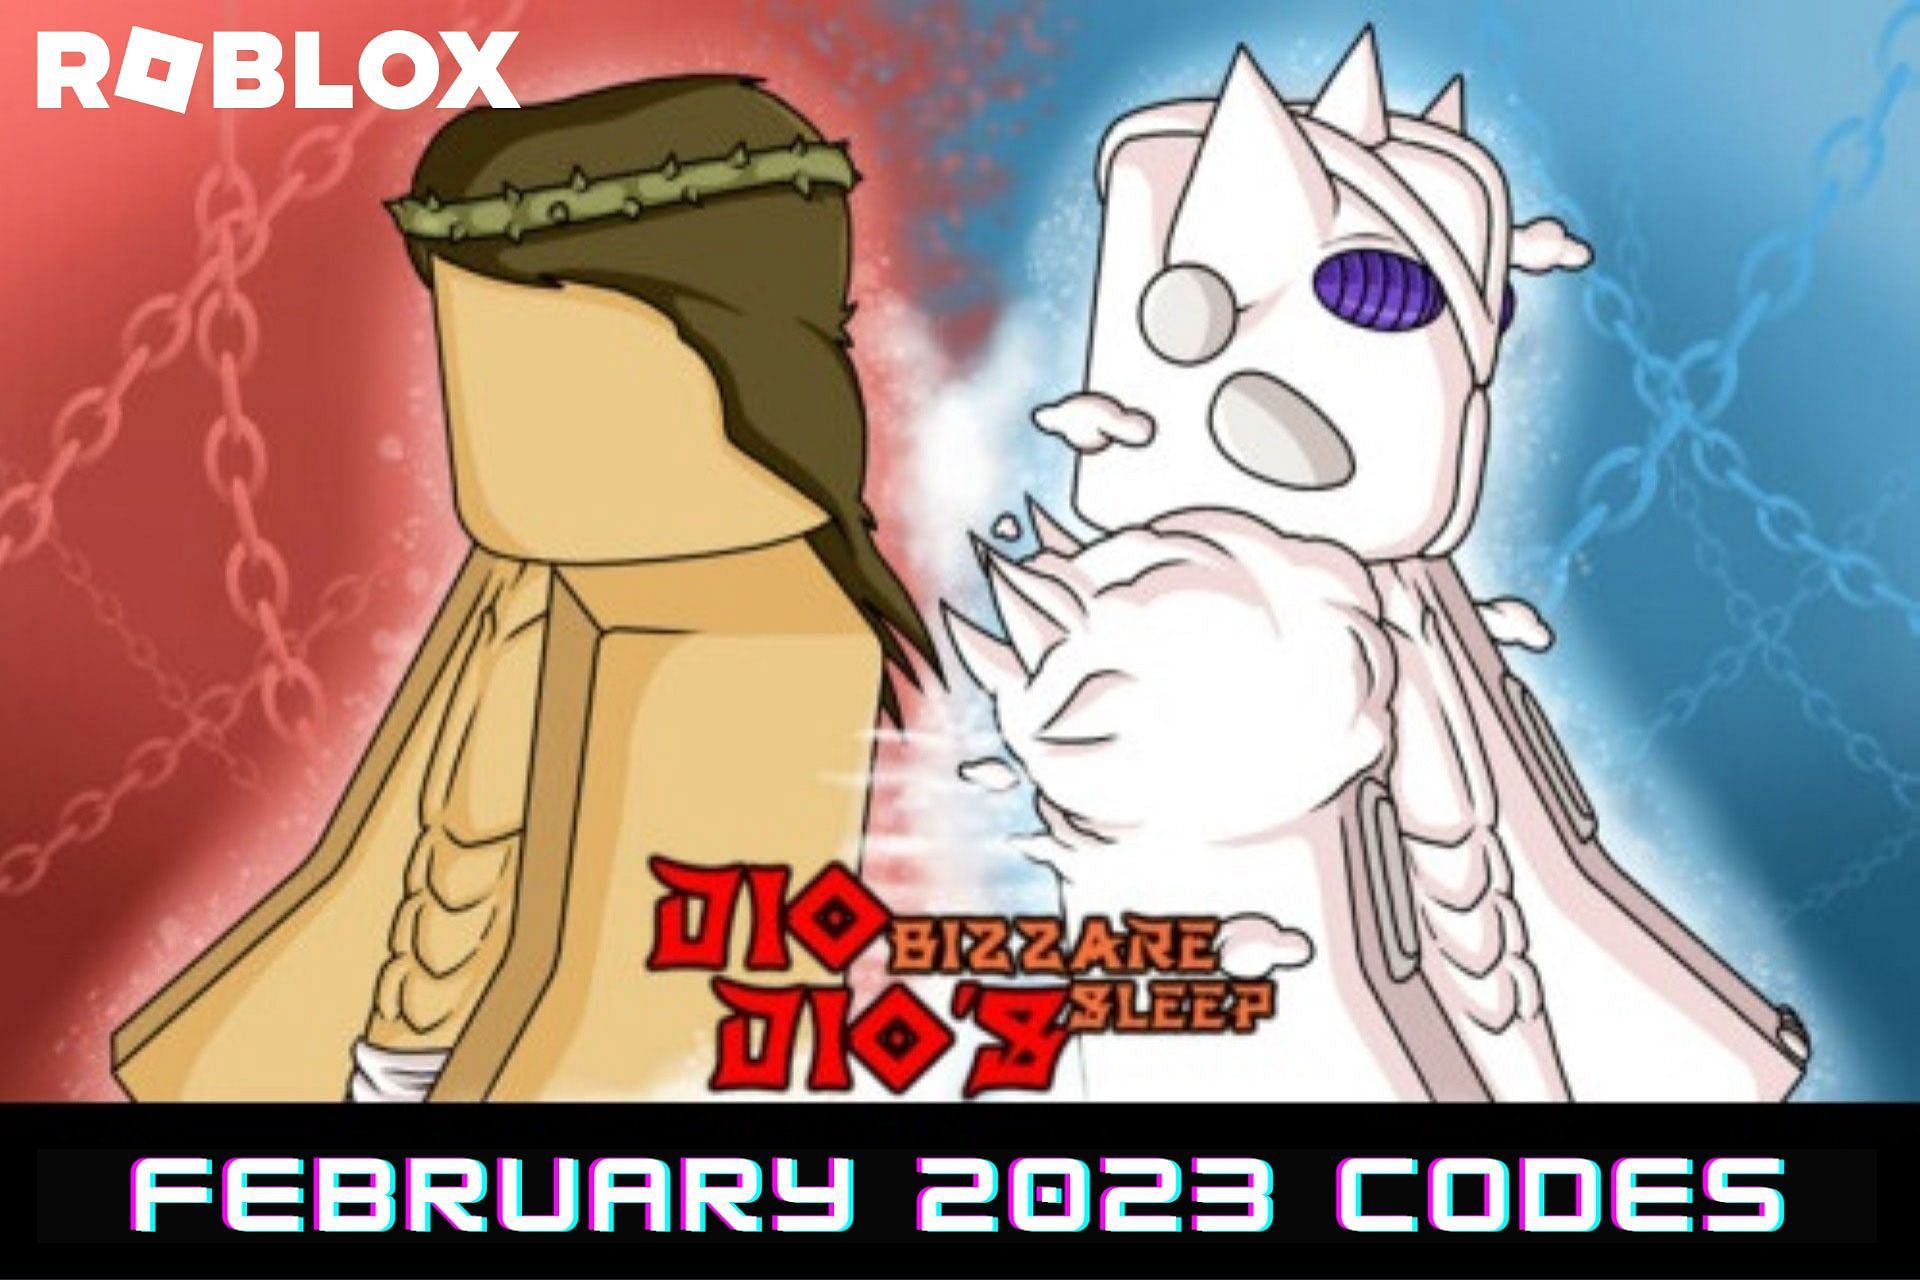 Roblox Dio Dio's Bizarre Sleep codes for February 2023: Free cash